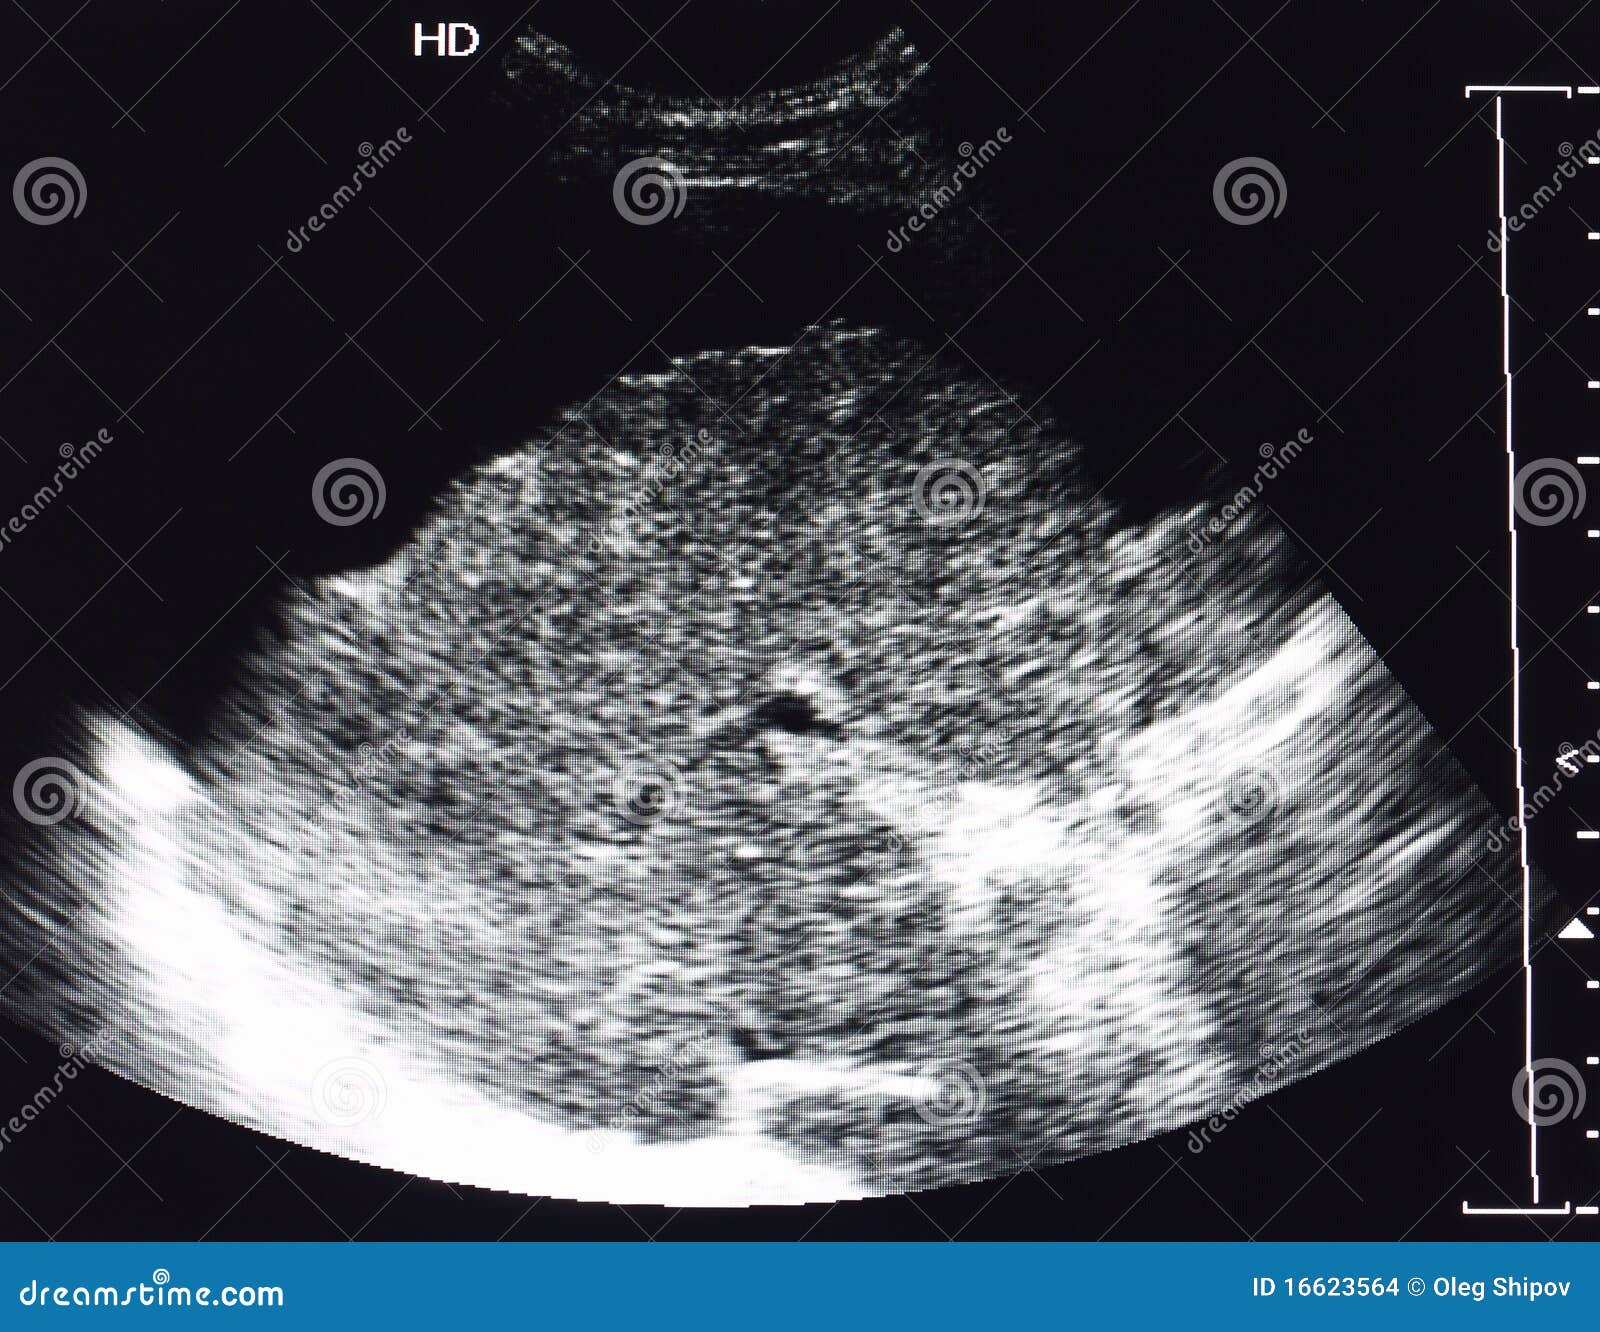 ultrasound image of liver cirrhosis